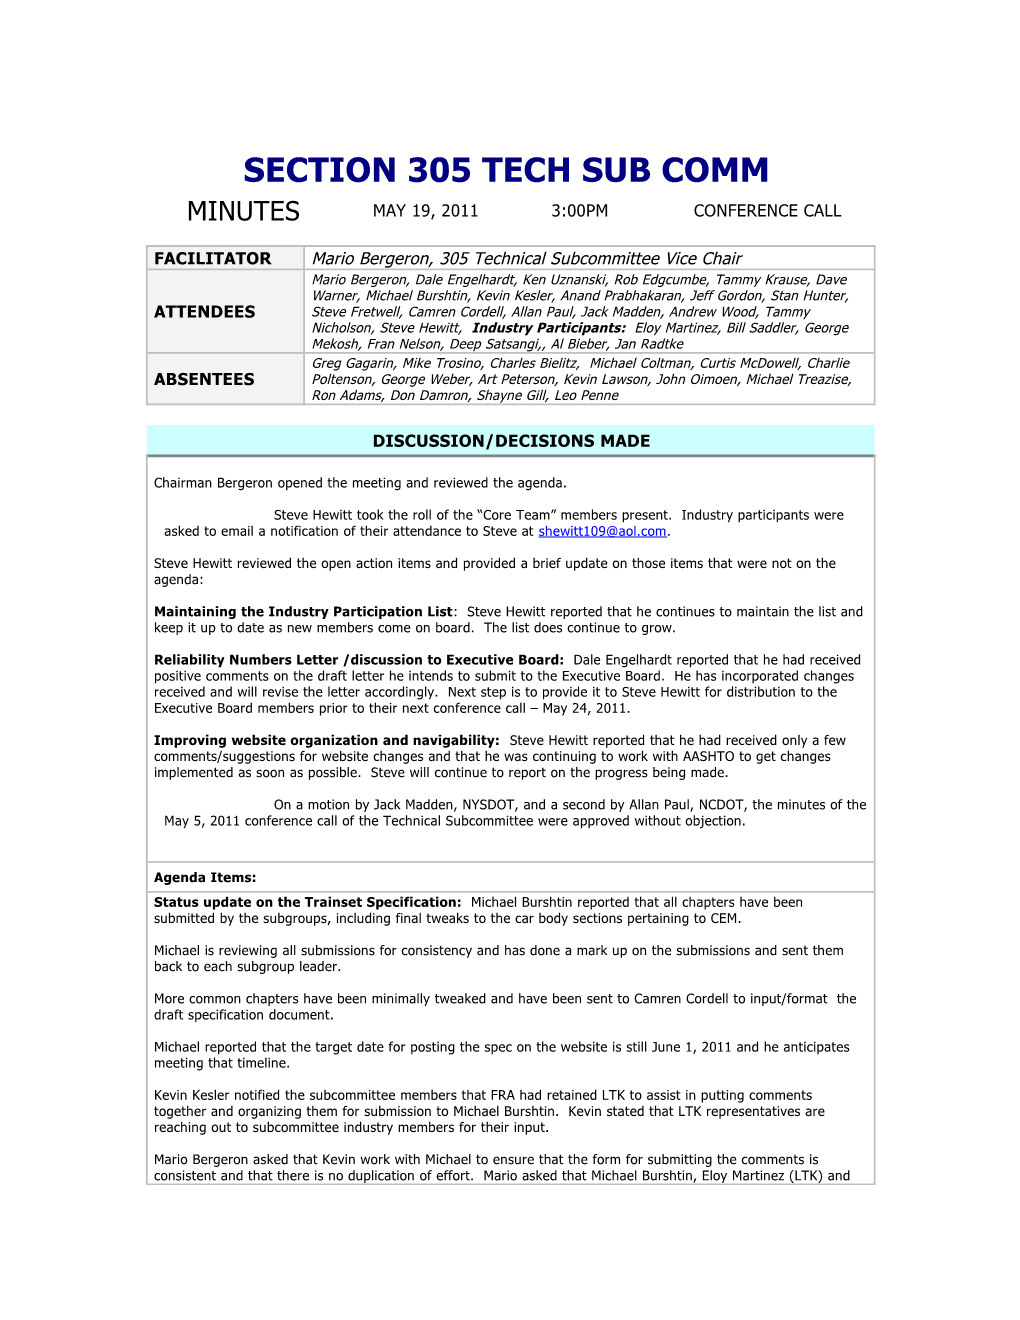 Section 305 Tech Sub Comm 5-19-11